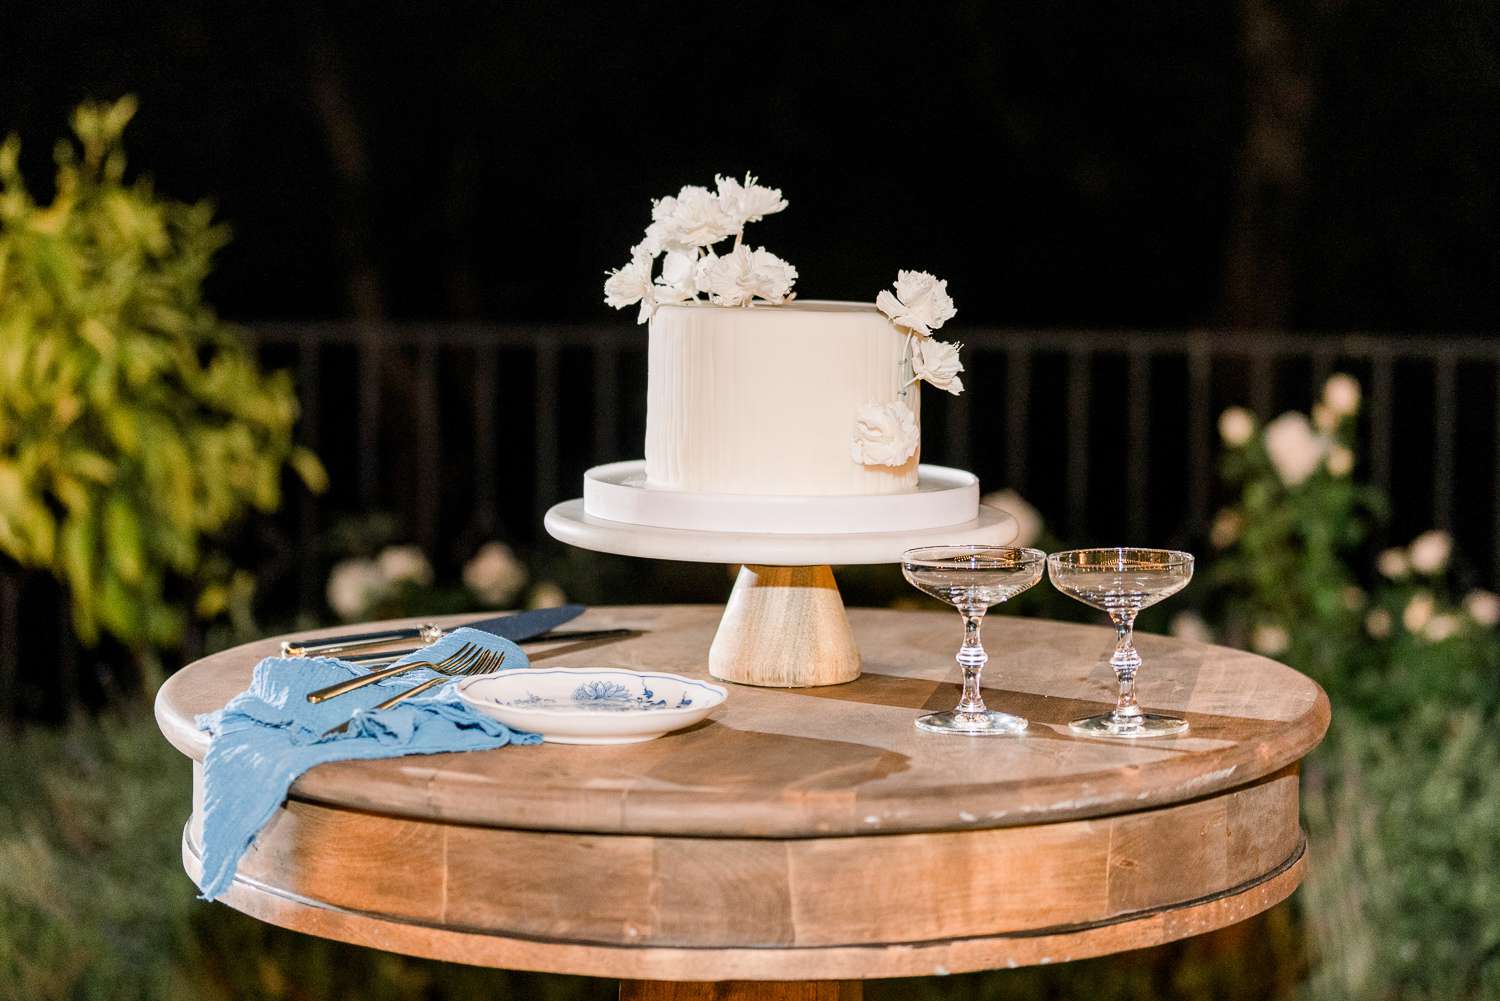 single-tier wedding cake on wooden table